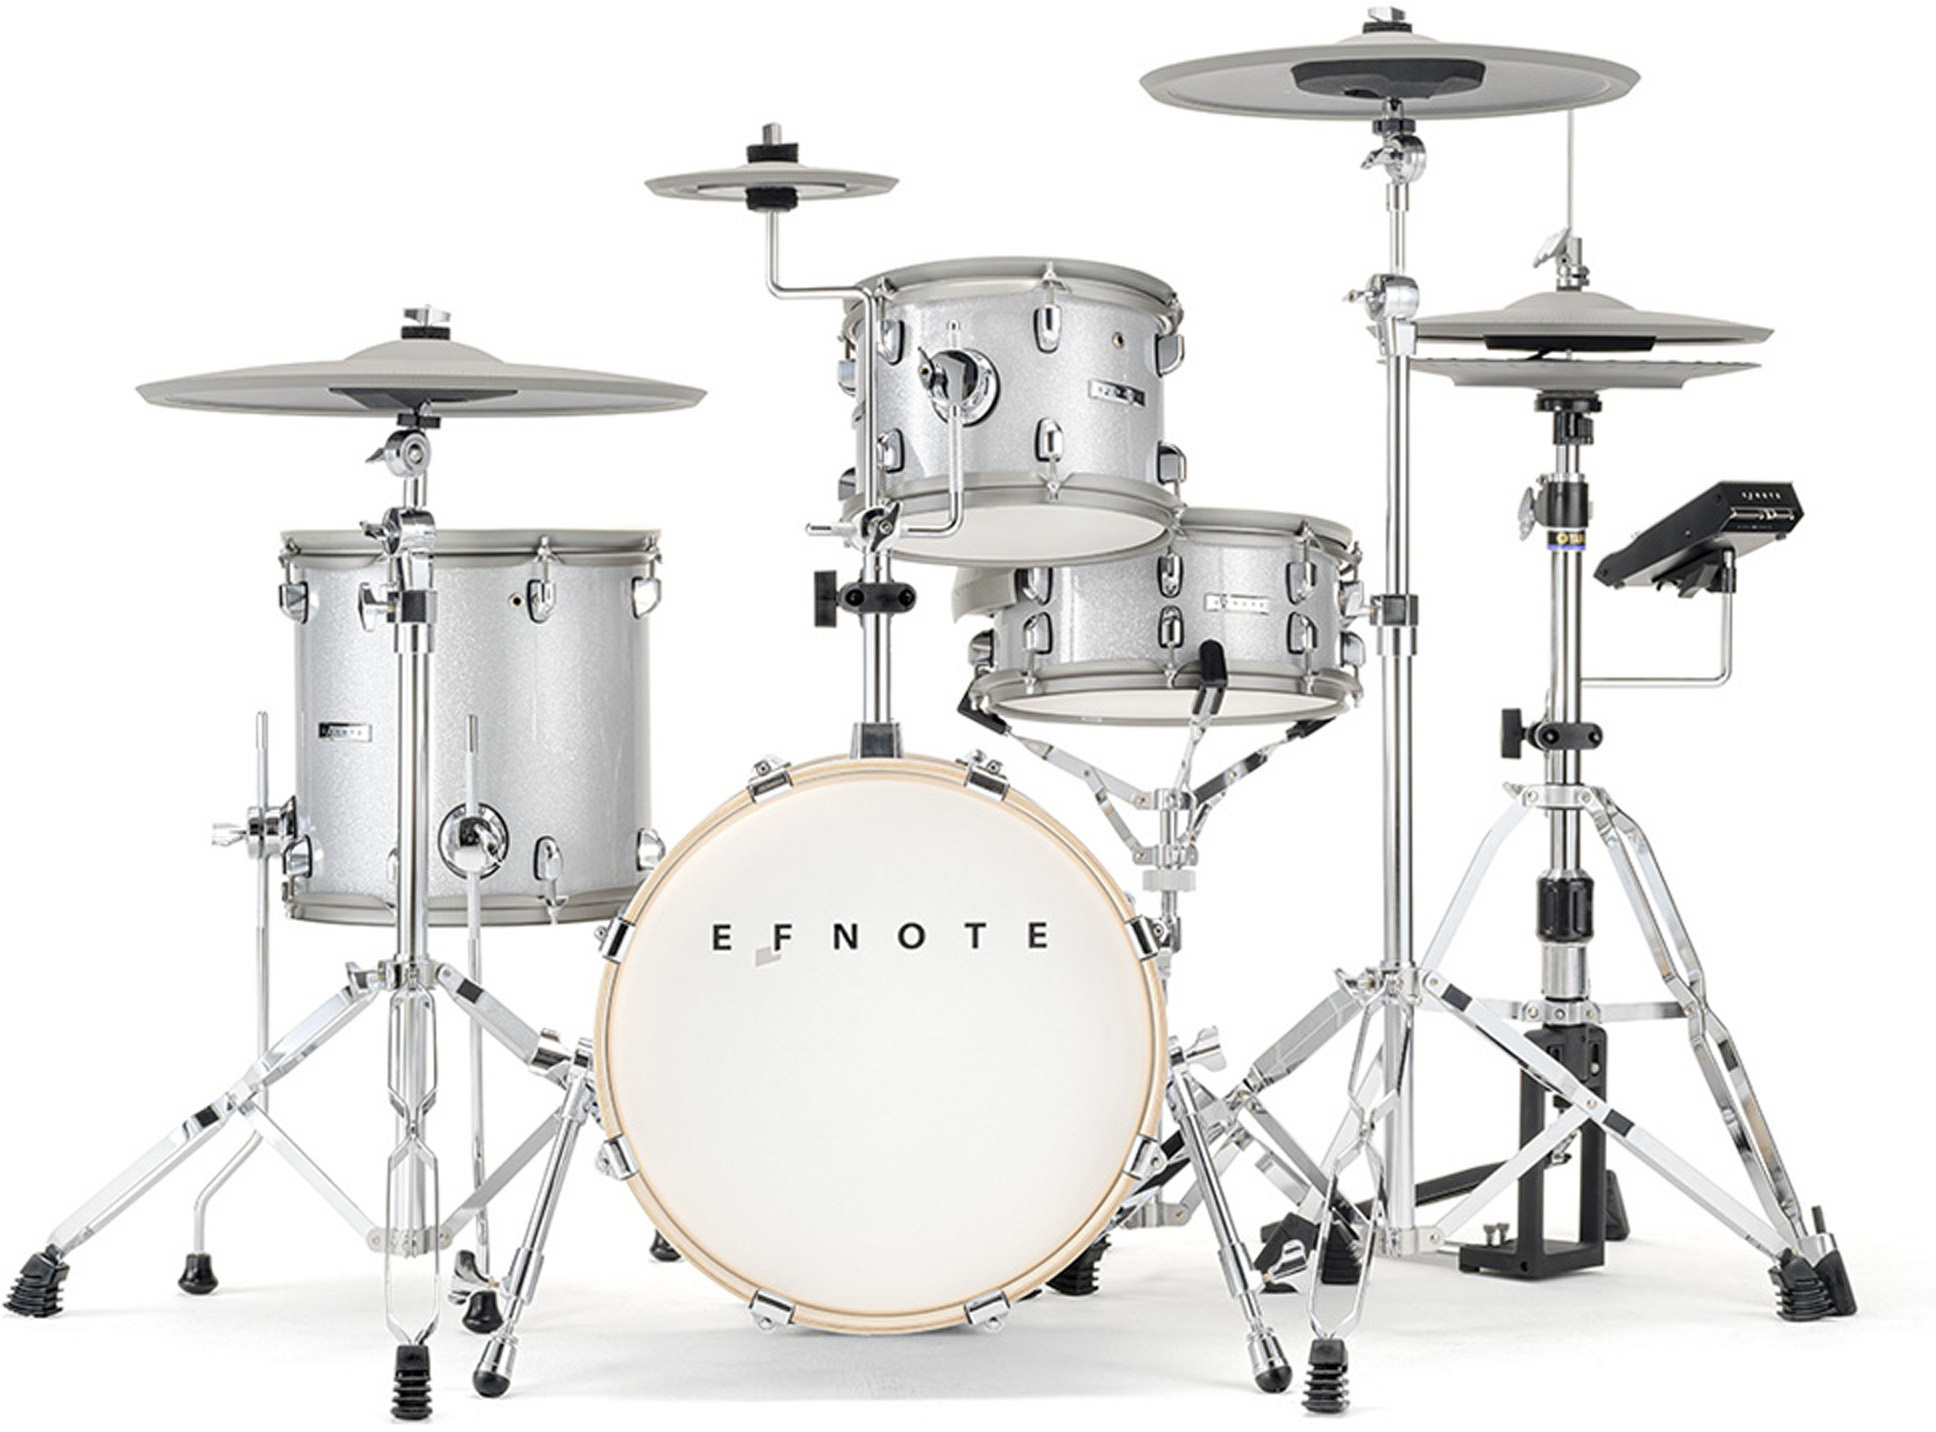 Efnote Efd5 Drum Kit - Komplett E-Drum Set - Main picture